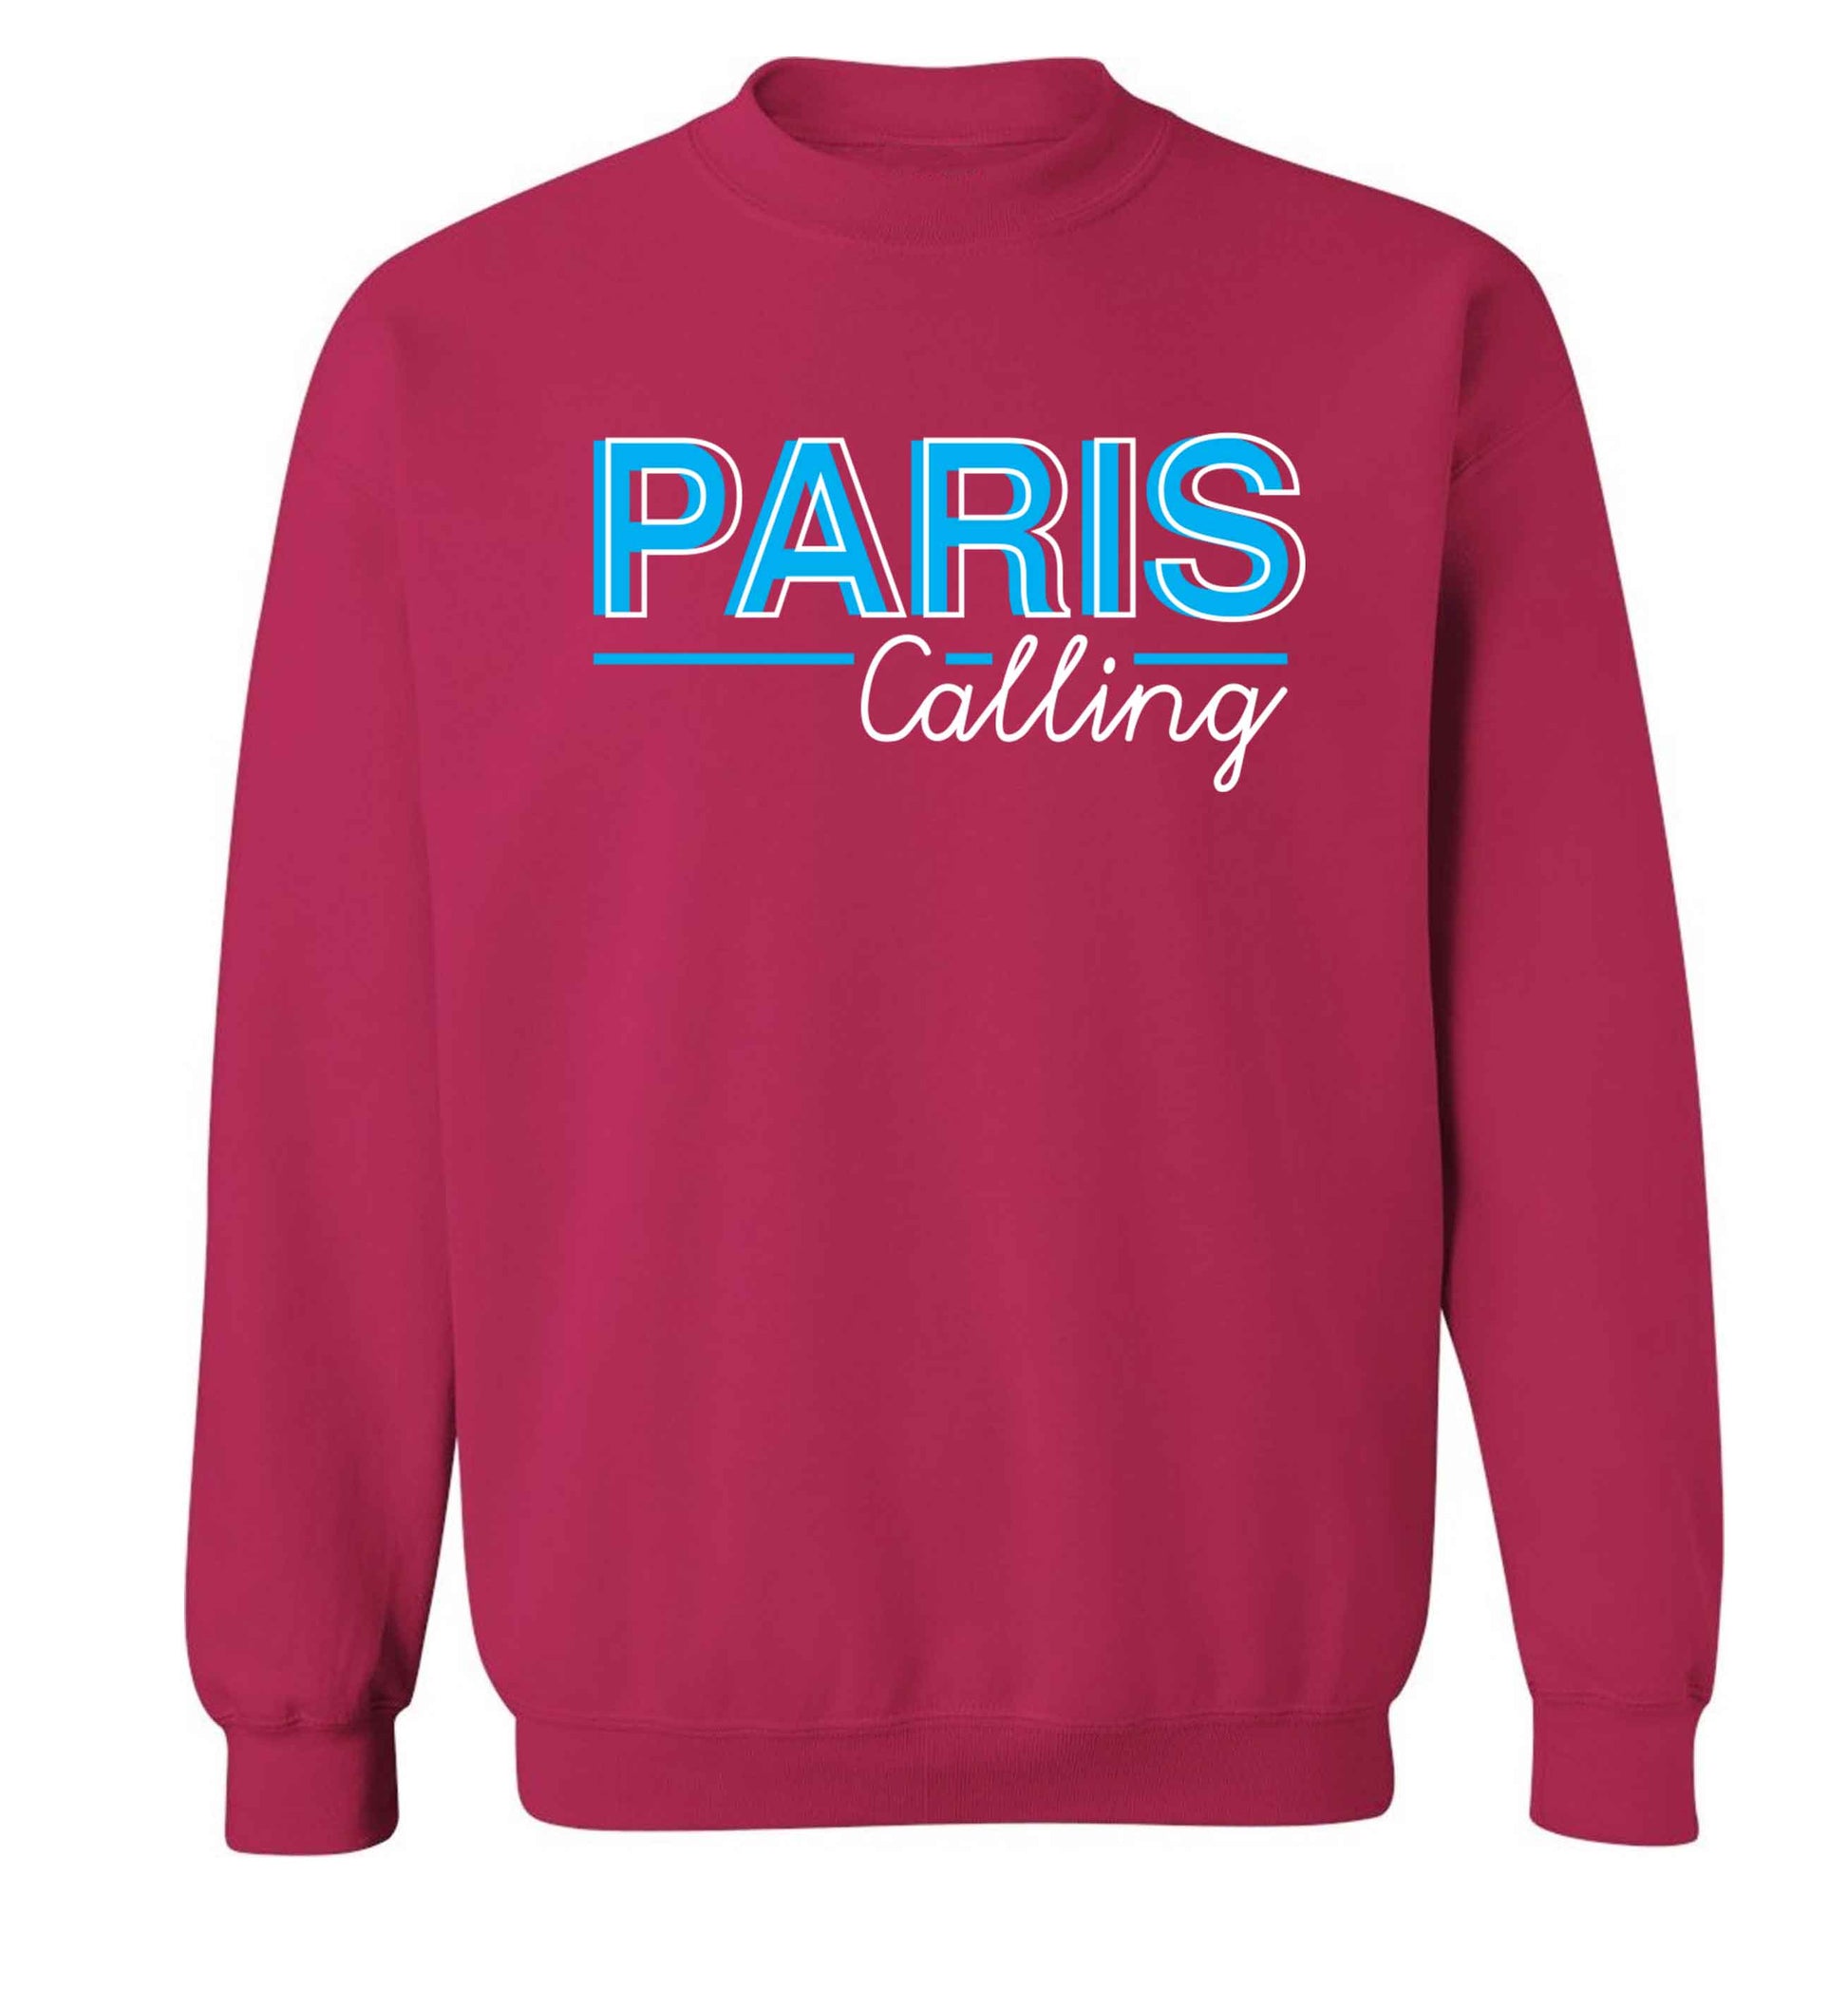 Paris calling Adult's unisex pink Sweater 2XL